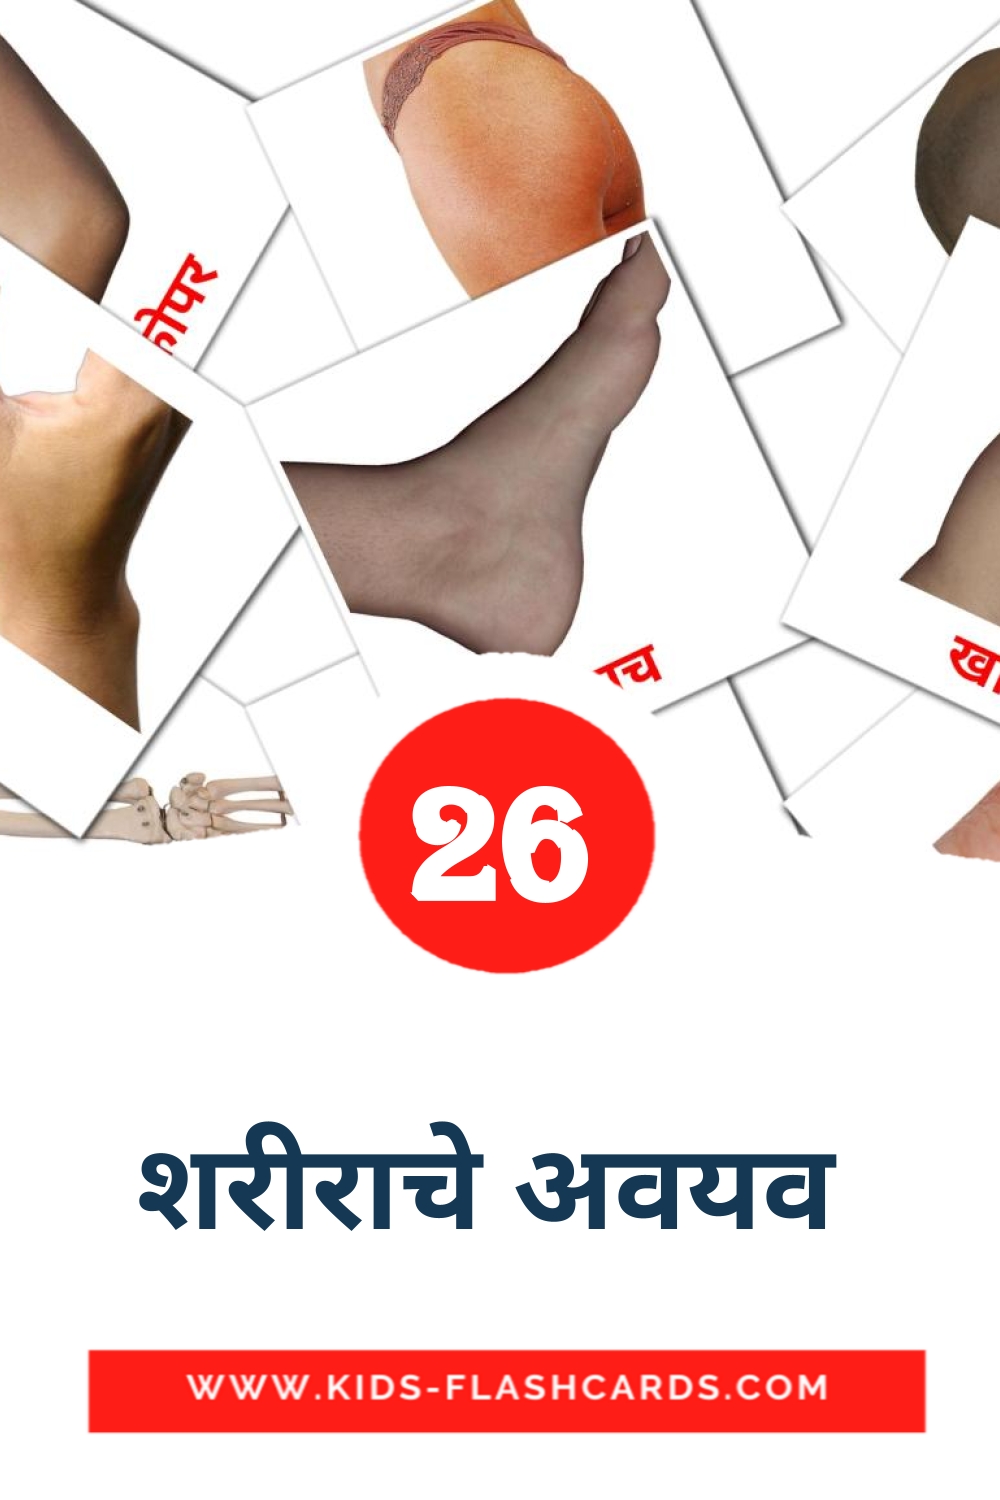 26 tarjetas didacticas de शरीराचे अवयव  para el jardín de infancia en marathi